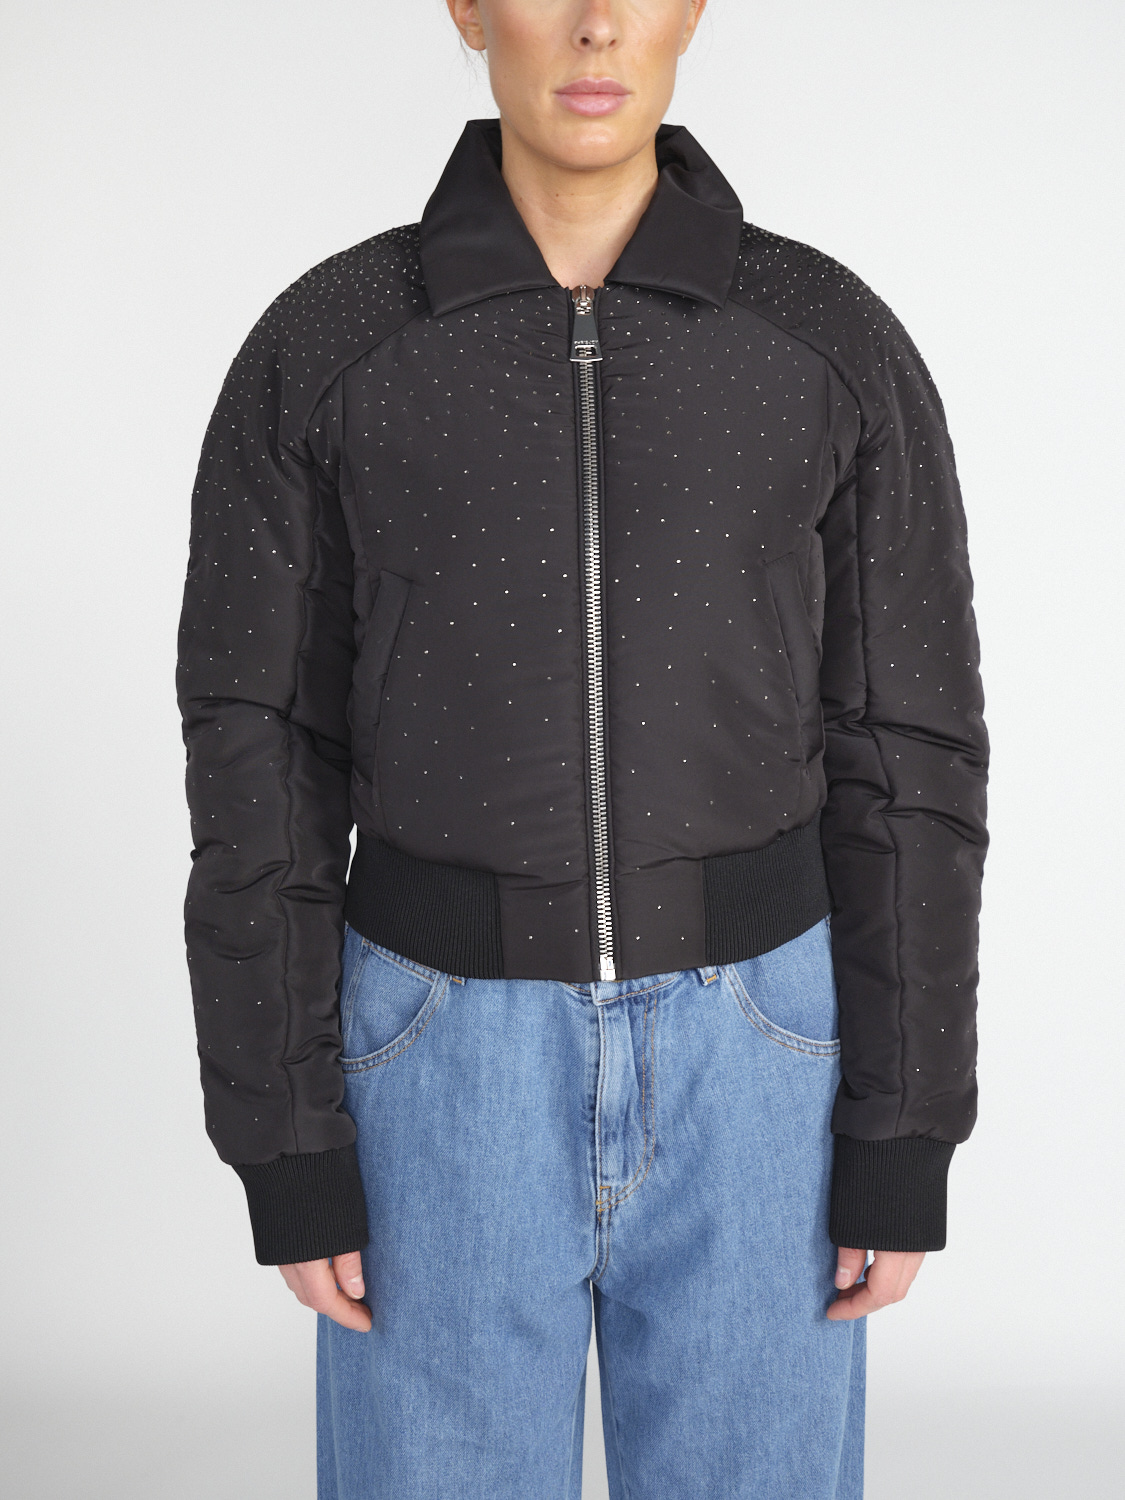 khrisjoy Jim - Short bomber jacket with glitter details   black XS/S